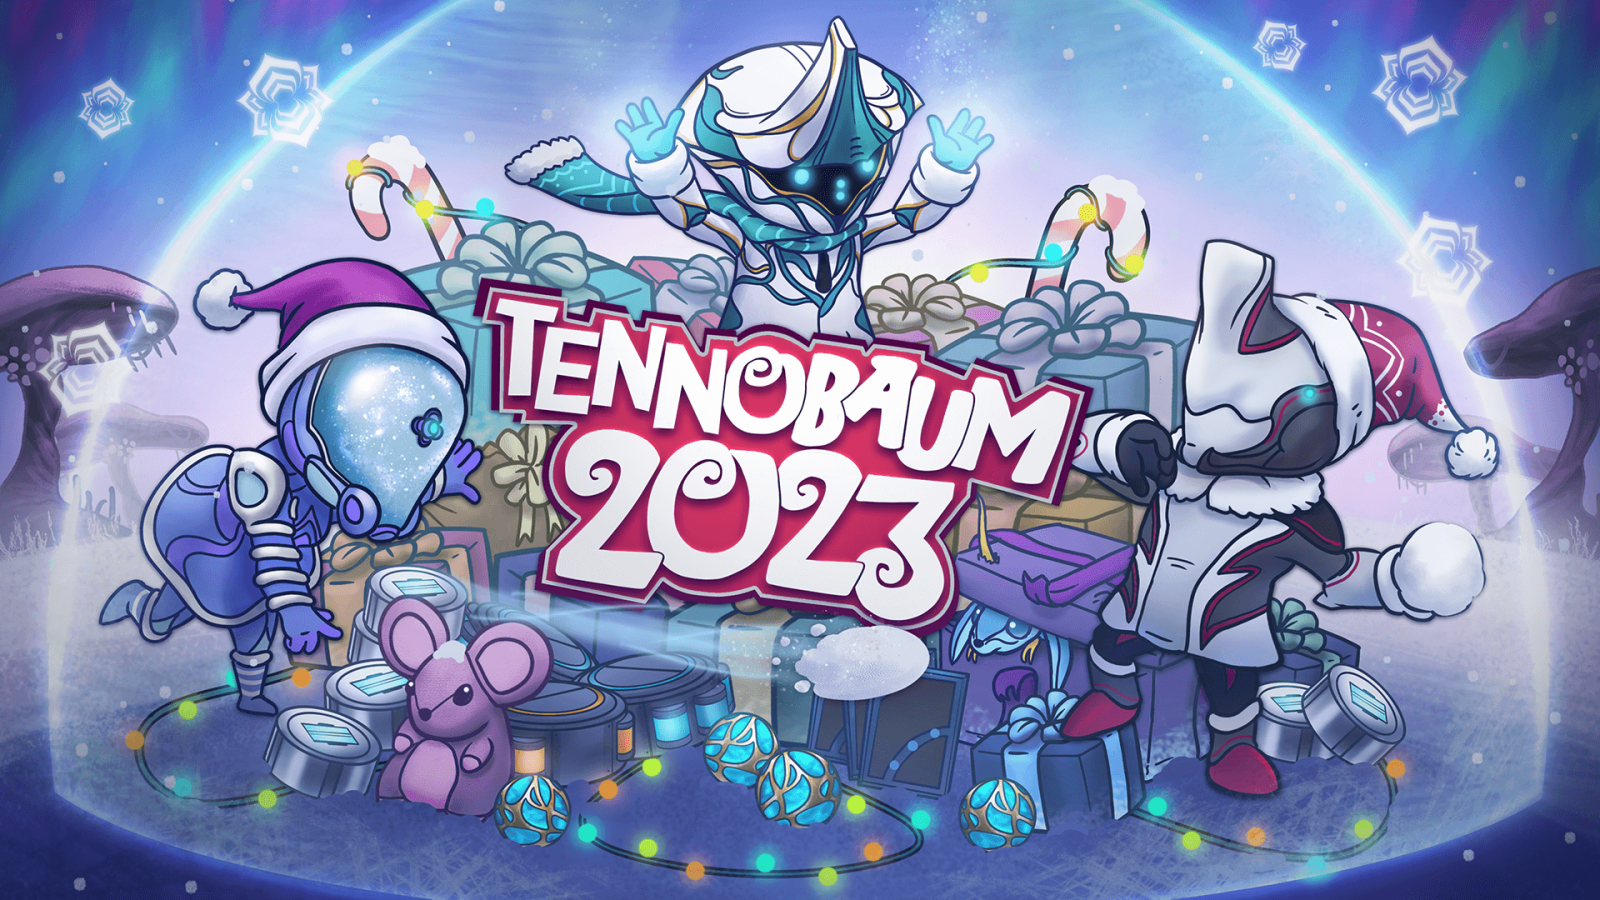 Tennobaum Holiday Card Contest 2023